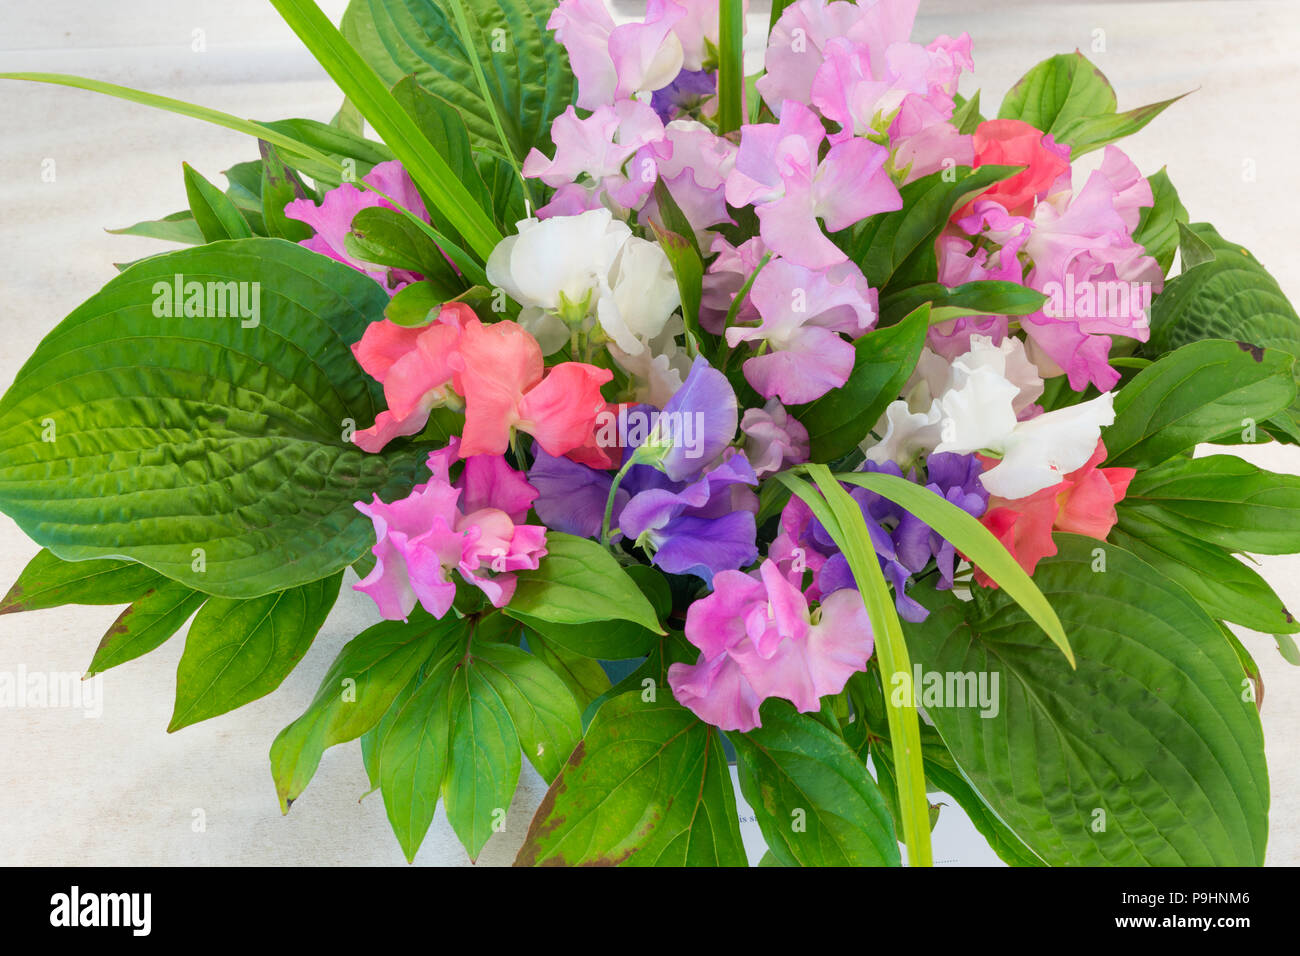 Sweet Pea flower arrangement with hosta leaves Stock Photo